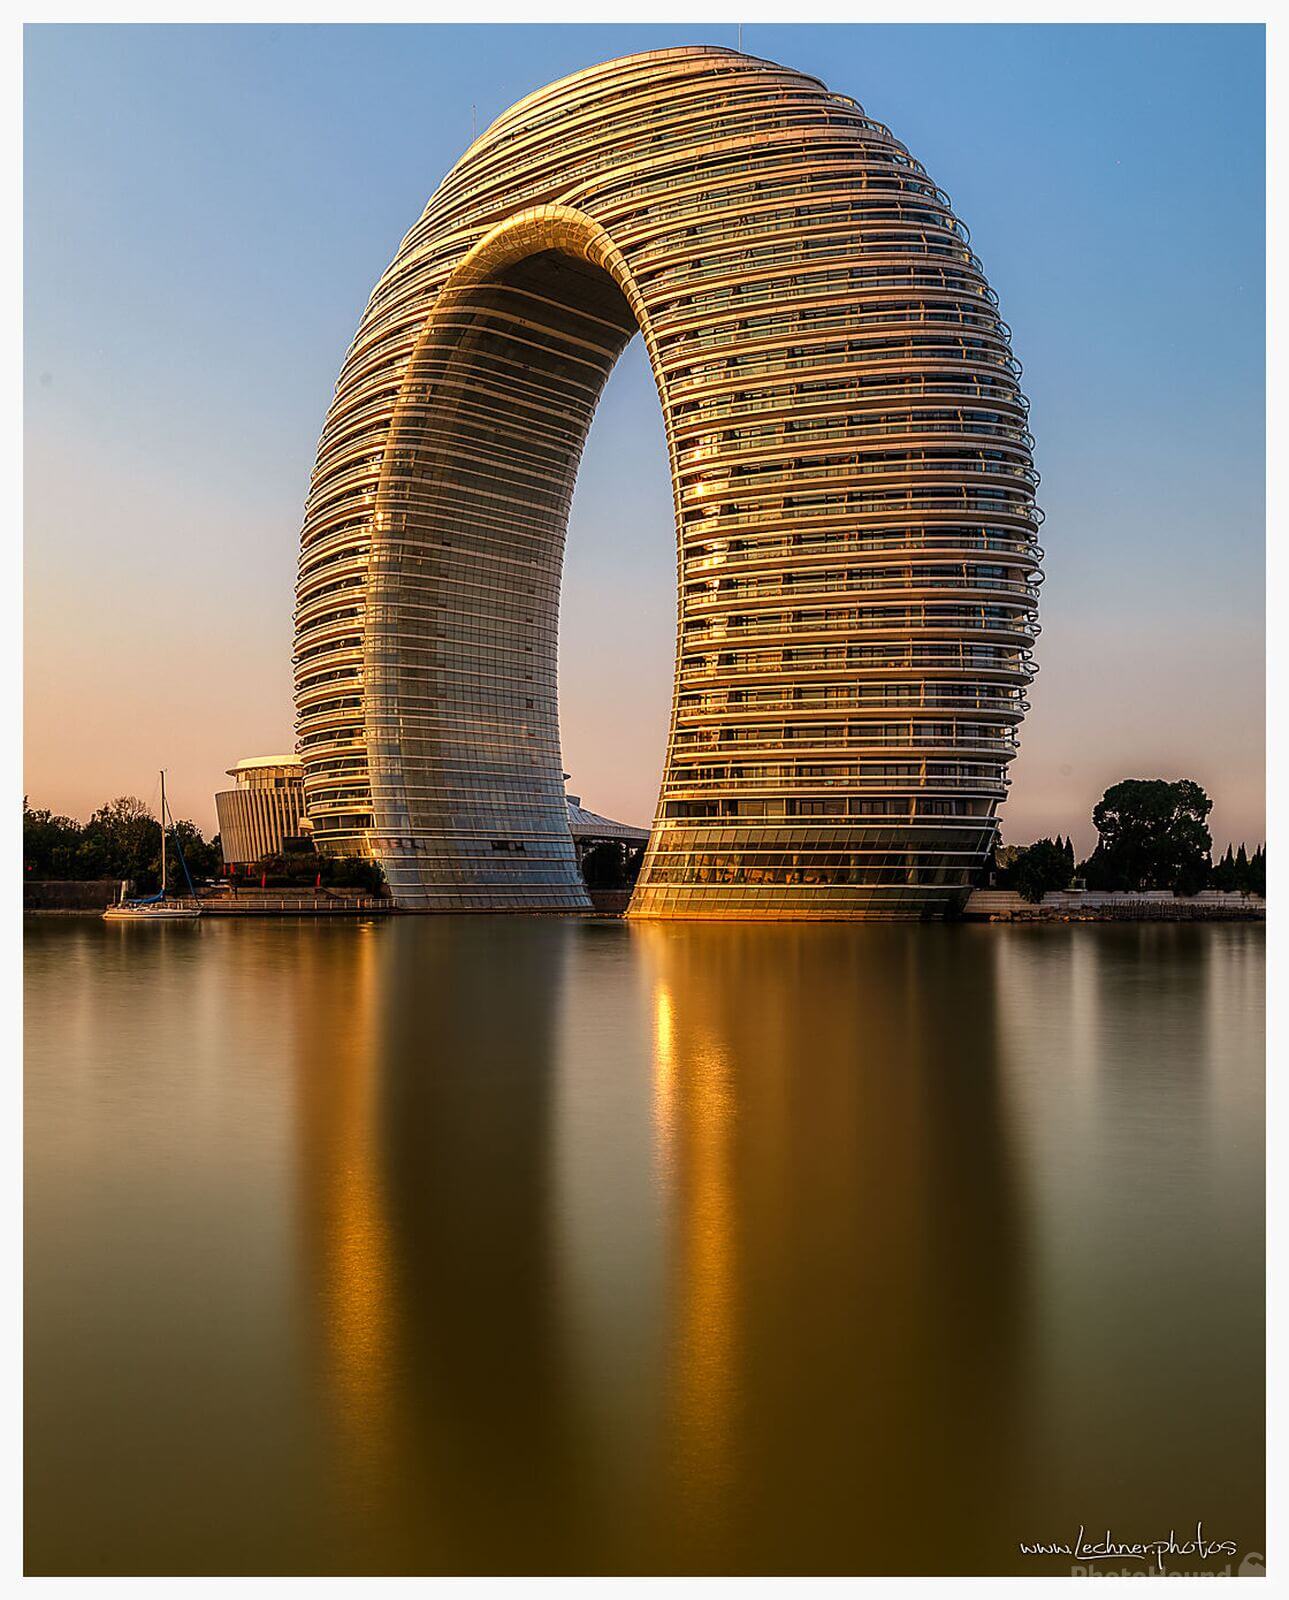 Image of Huzhou Sheraton Hot Sping Resort by Florian Lechner